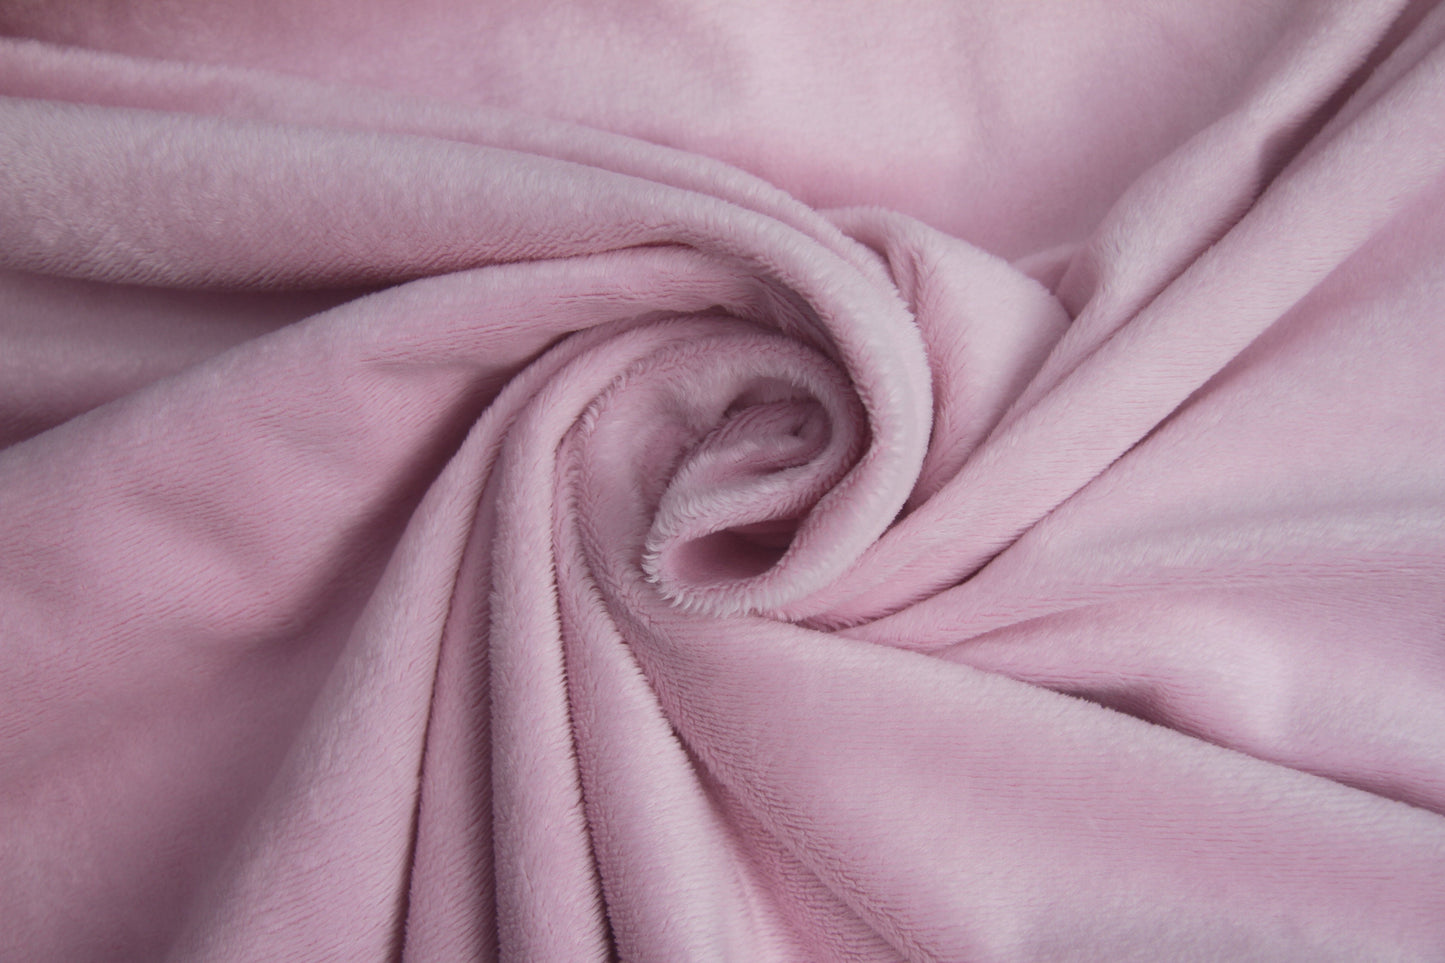 Bubblegum Fleece  -  Pink